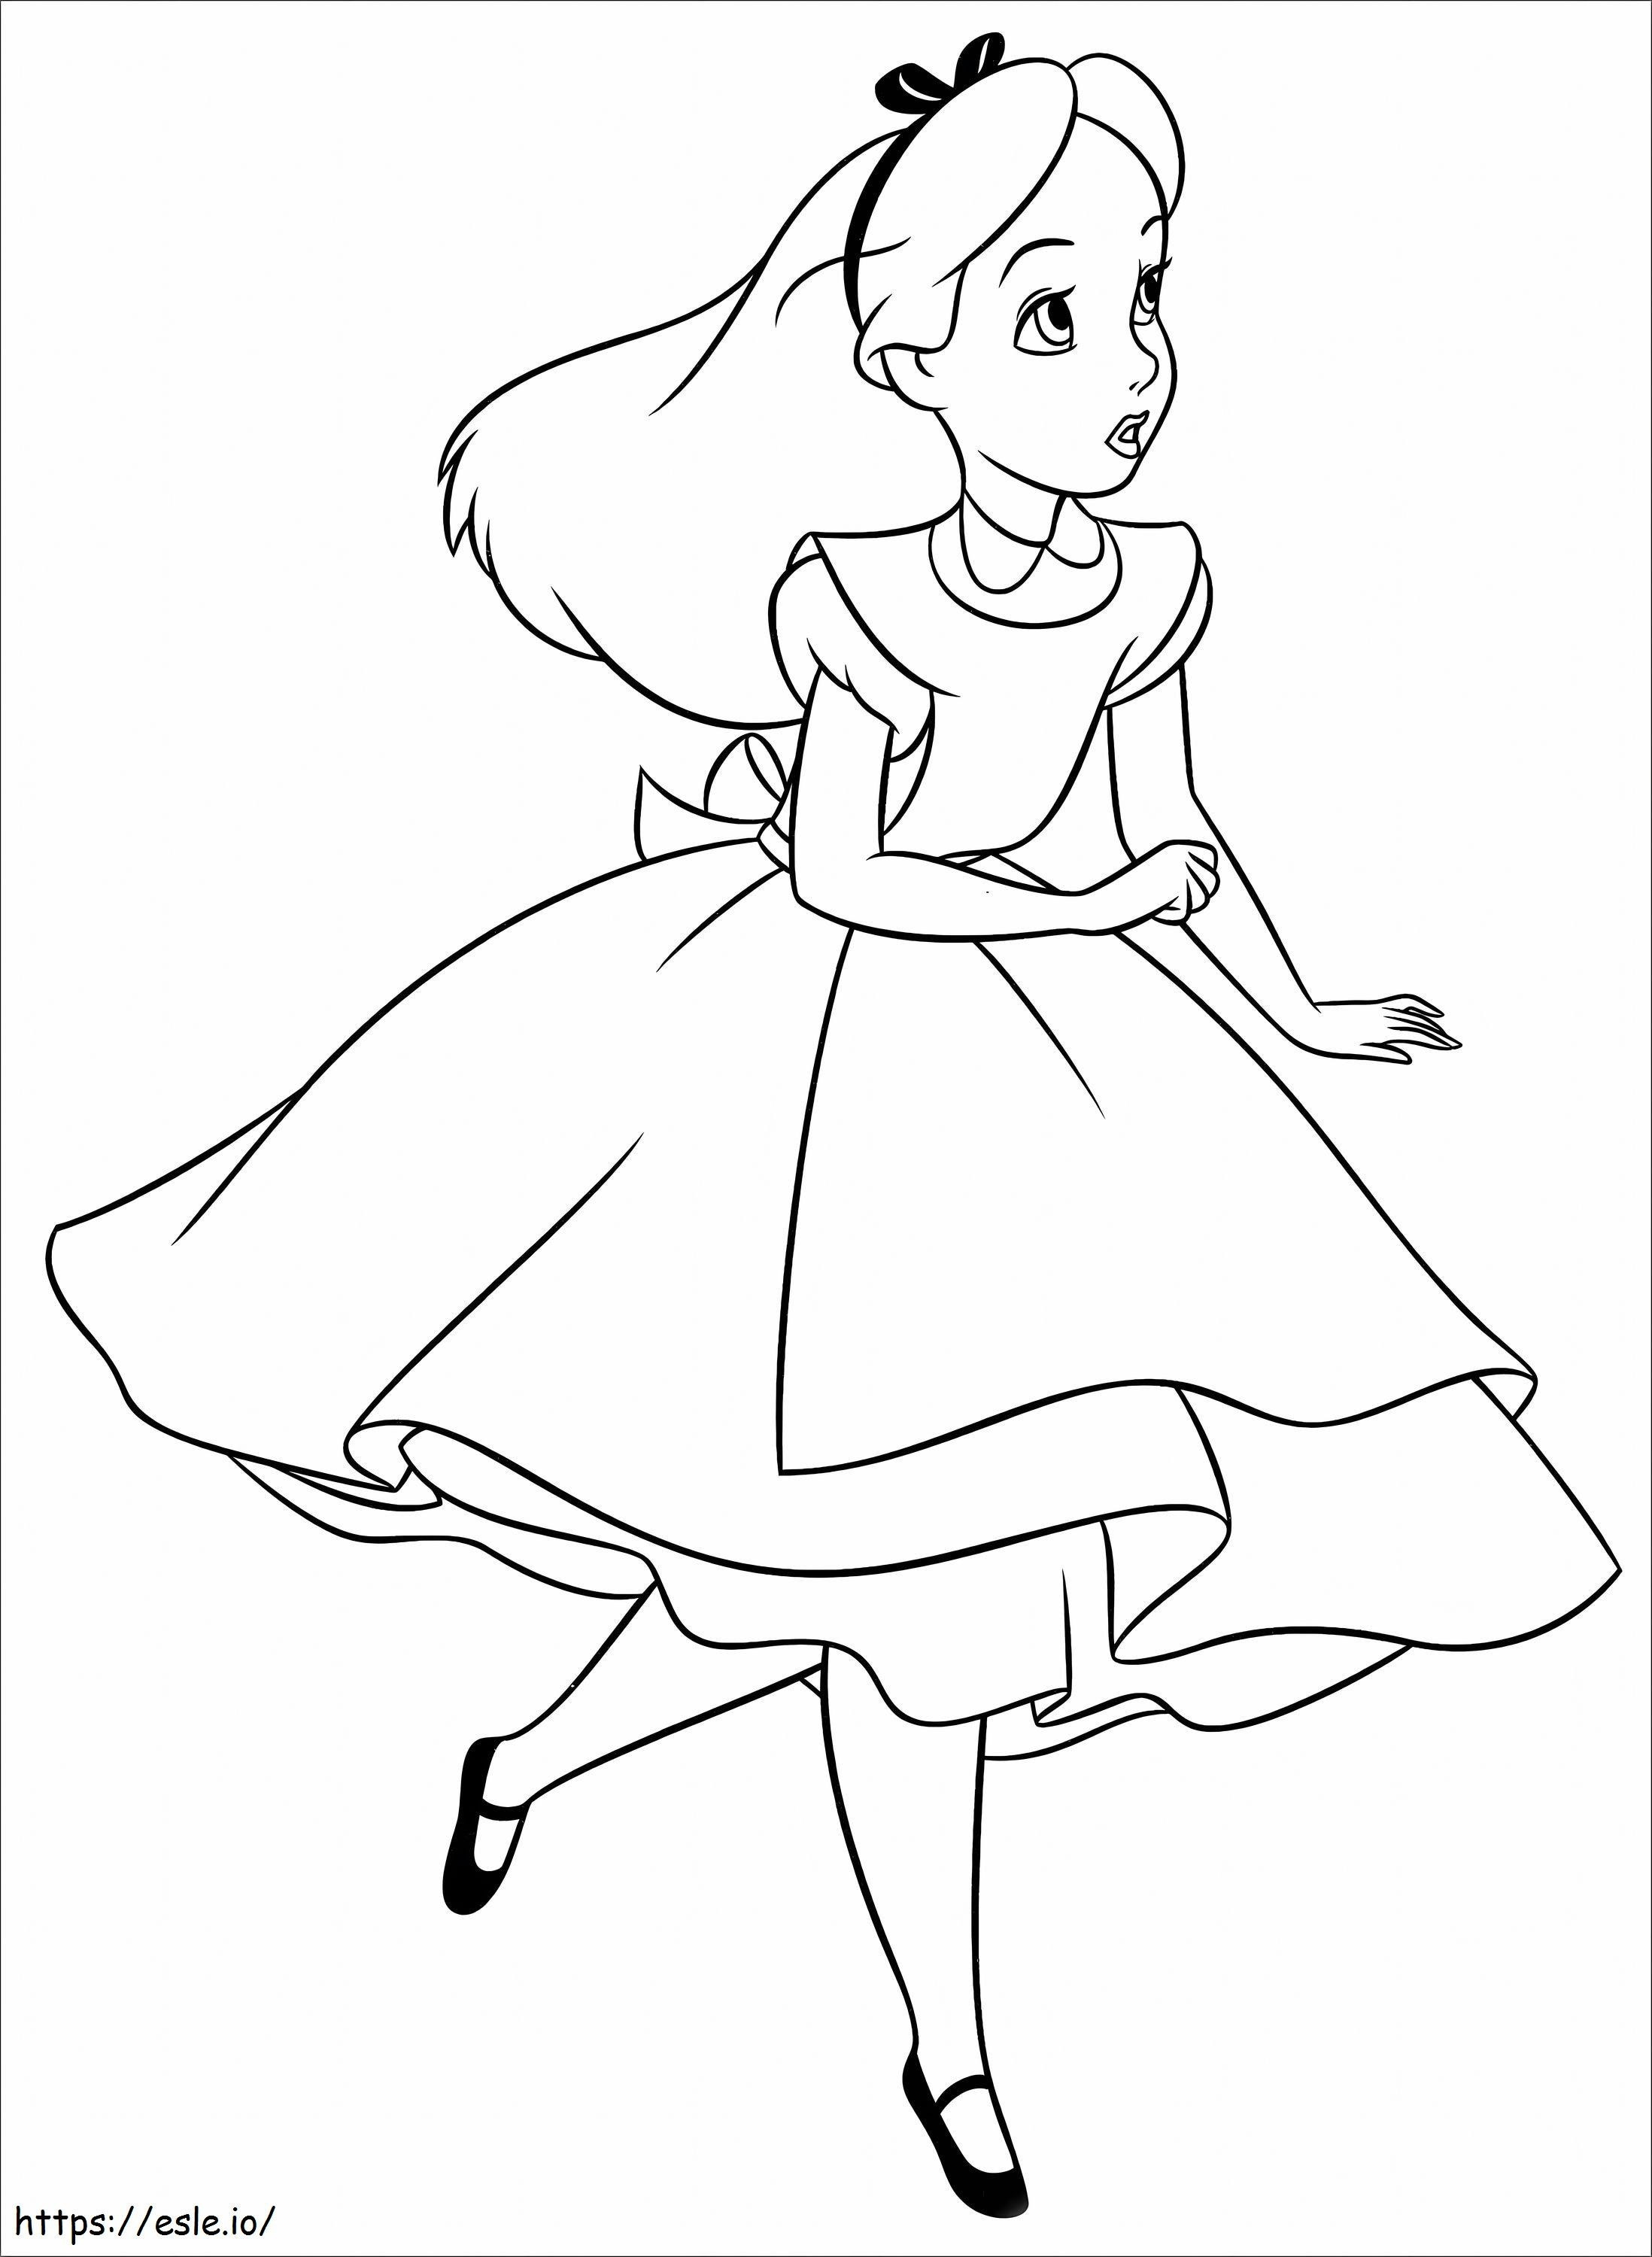 Disney Alice correndo em escala para colorir